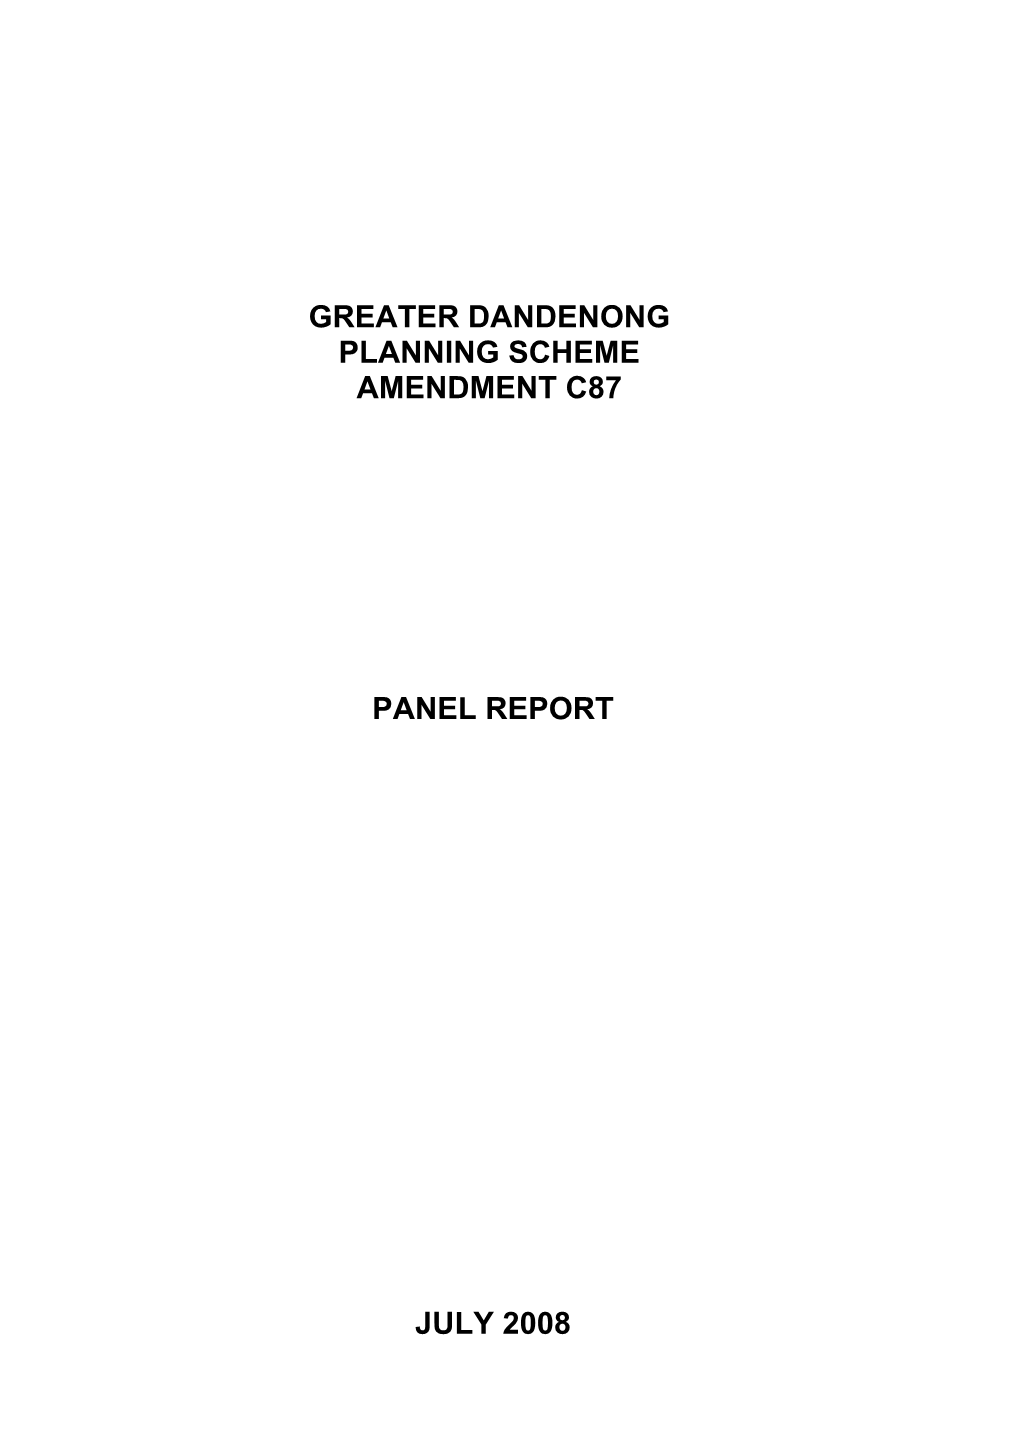 Greater Dandenong Planning Scheme Amendment C87 Panel Report: July 2008